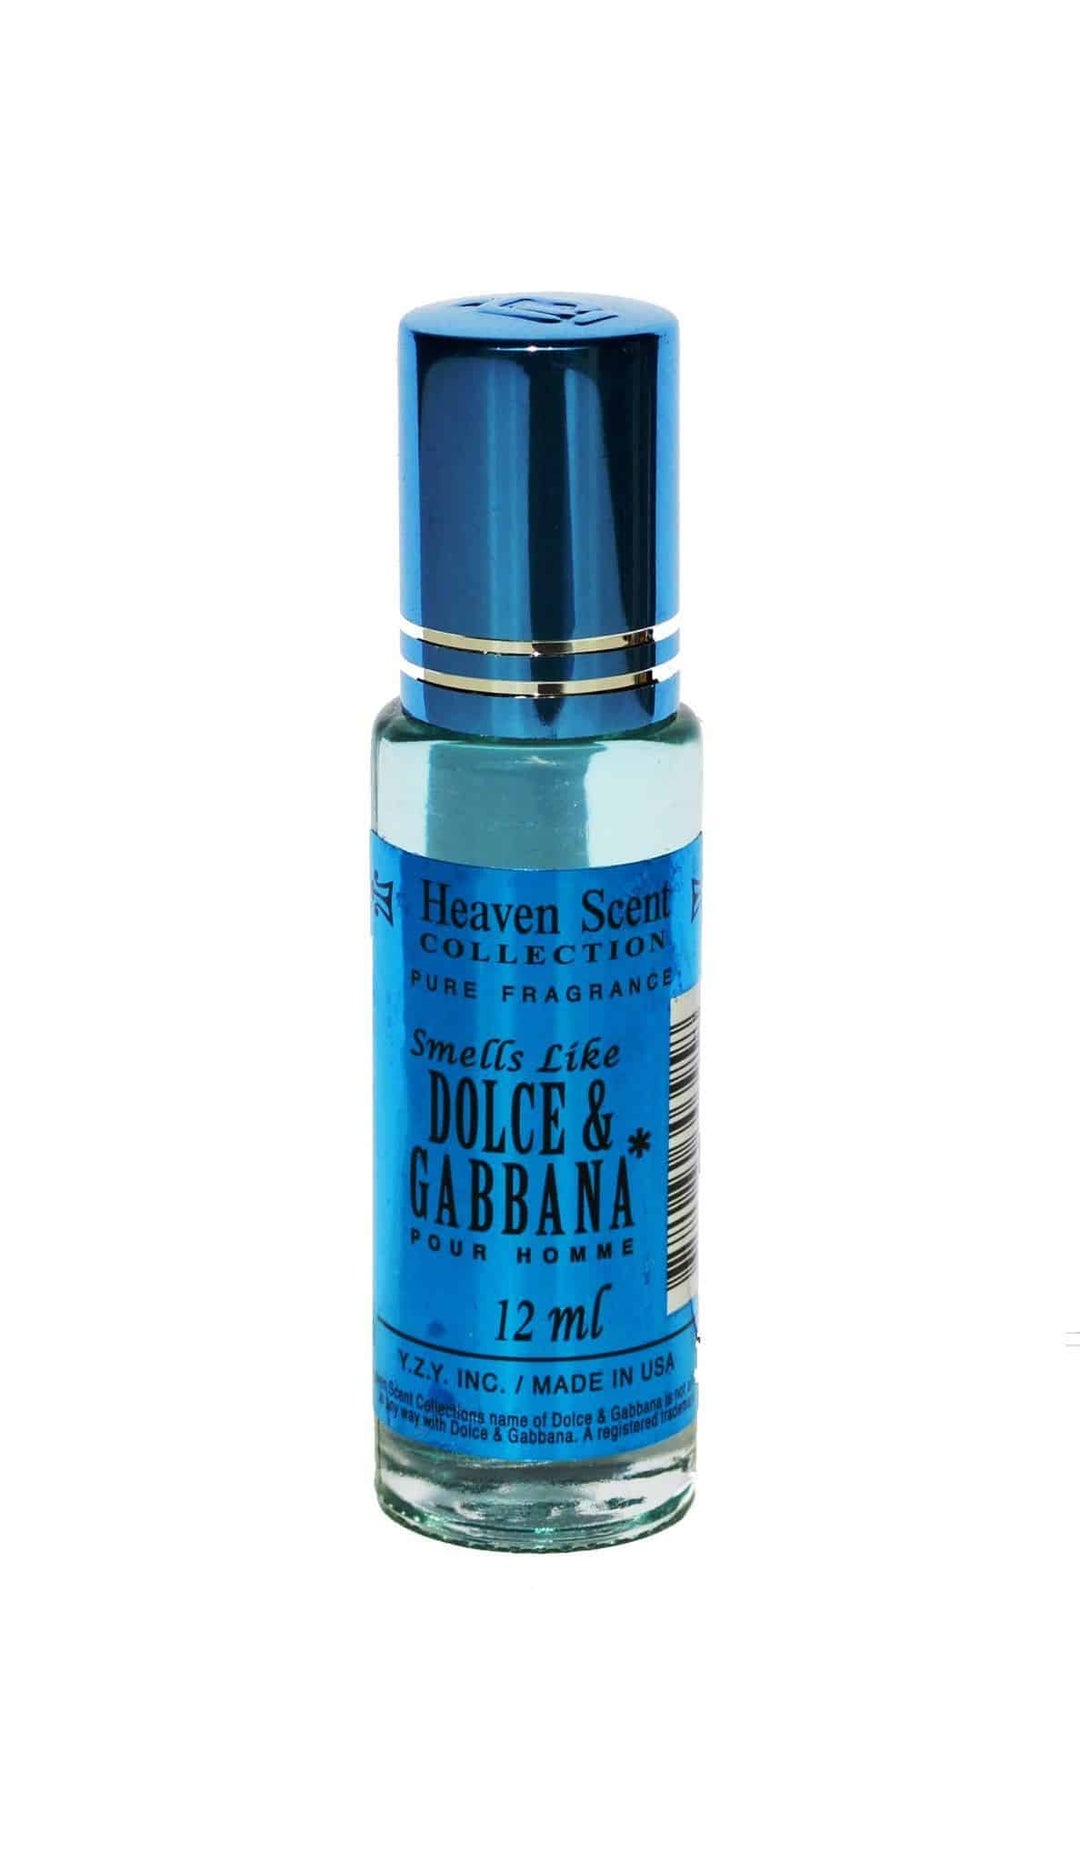 Dolce & Gabbana by Heaven Scent Pure Fragrance Oil Mini for Men